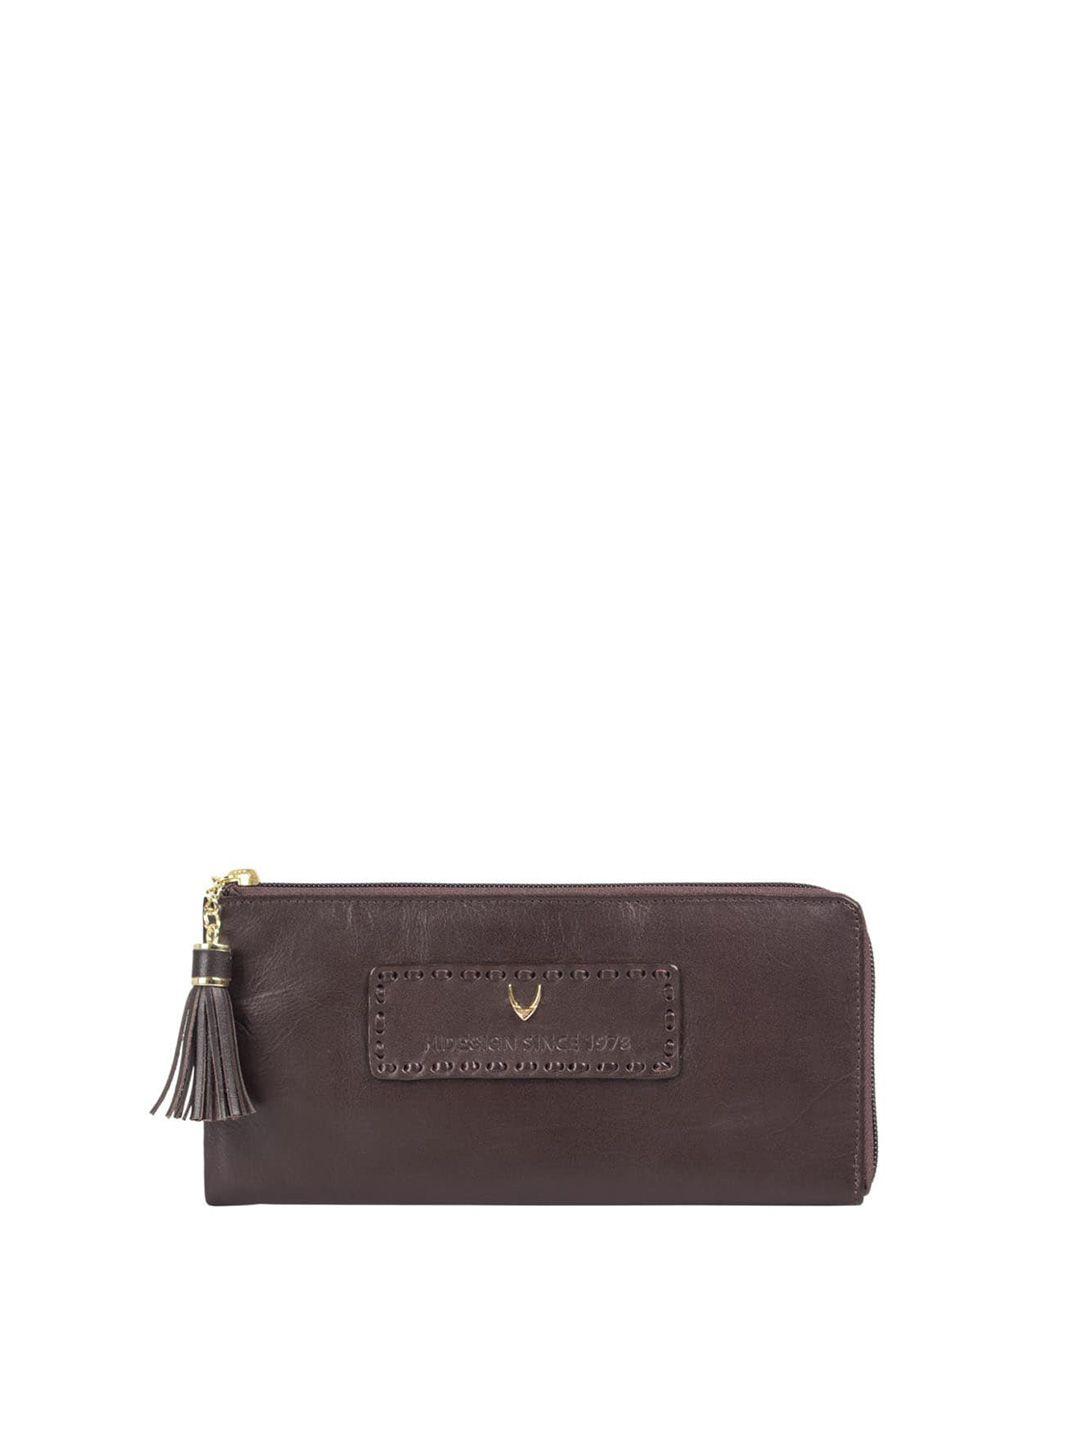 hidesign-brown-purse-clutch-with-tassel